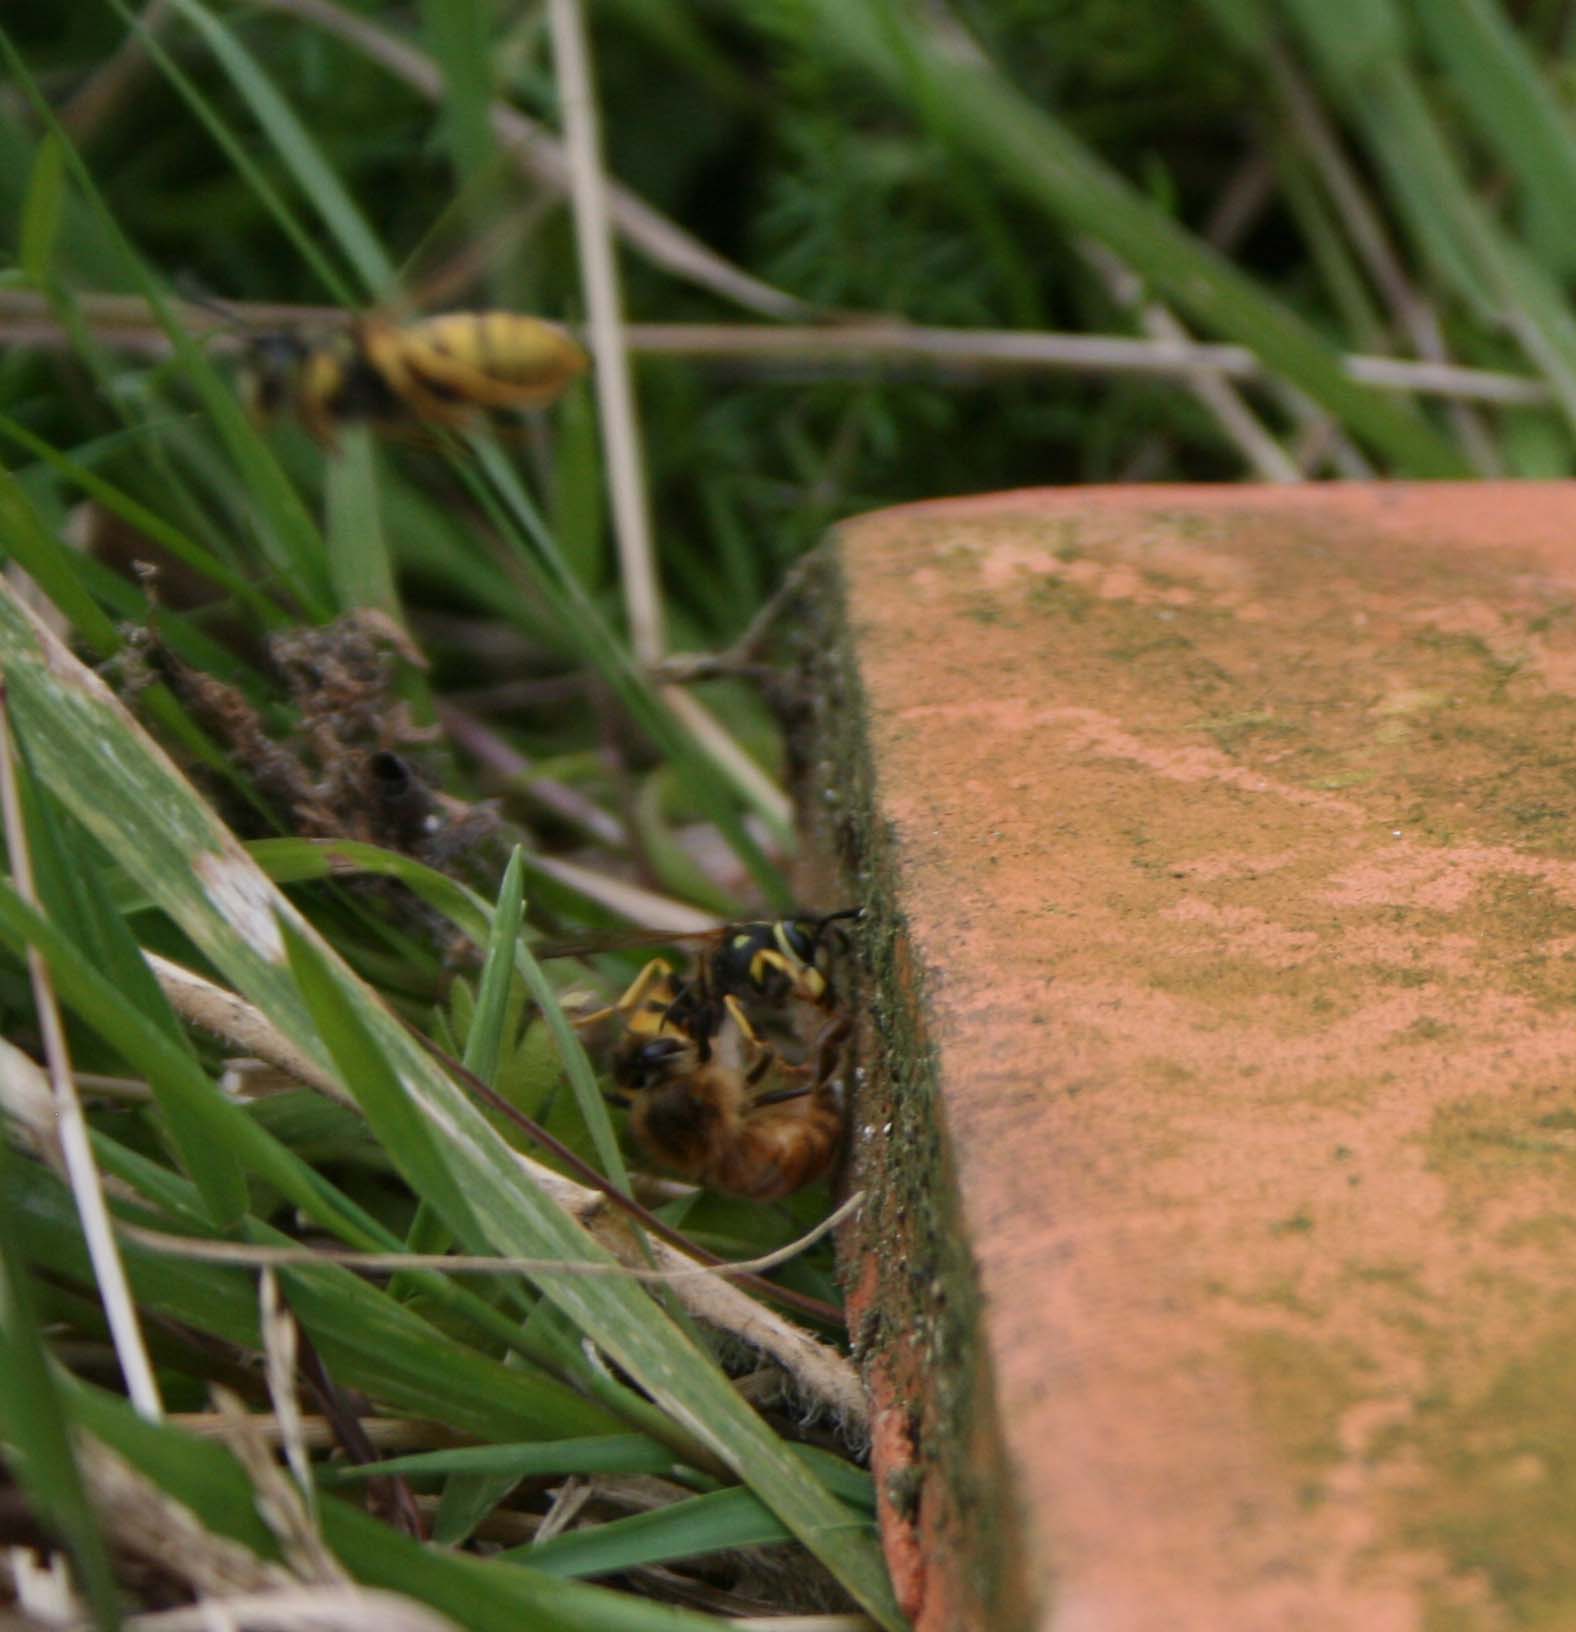 wasps-attacking-bees 037a.jpg